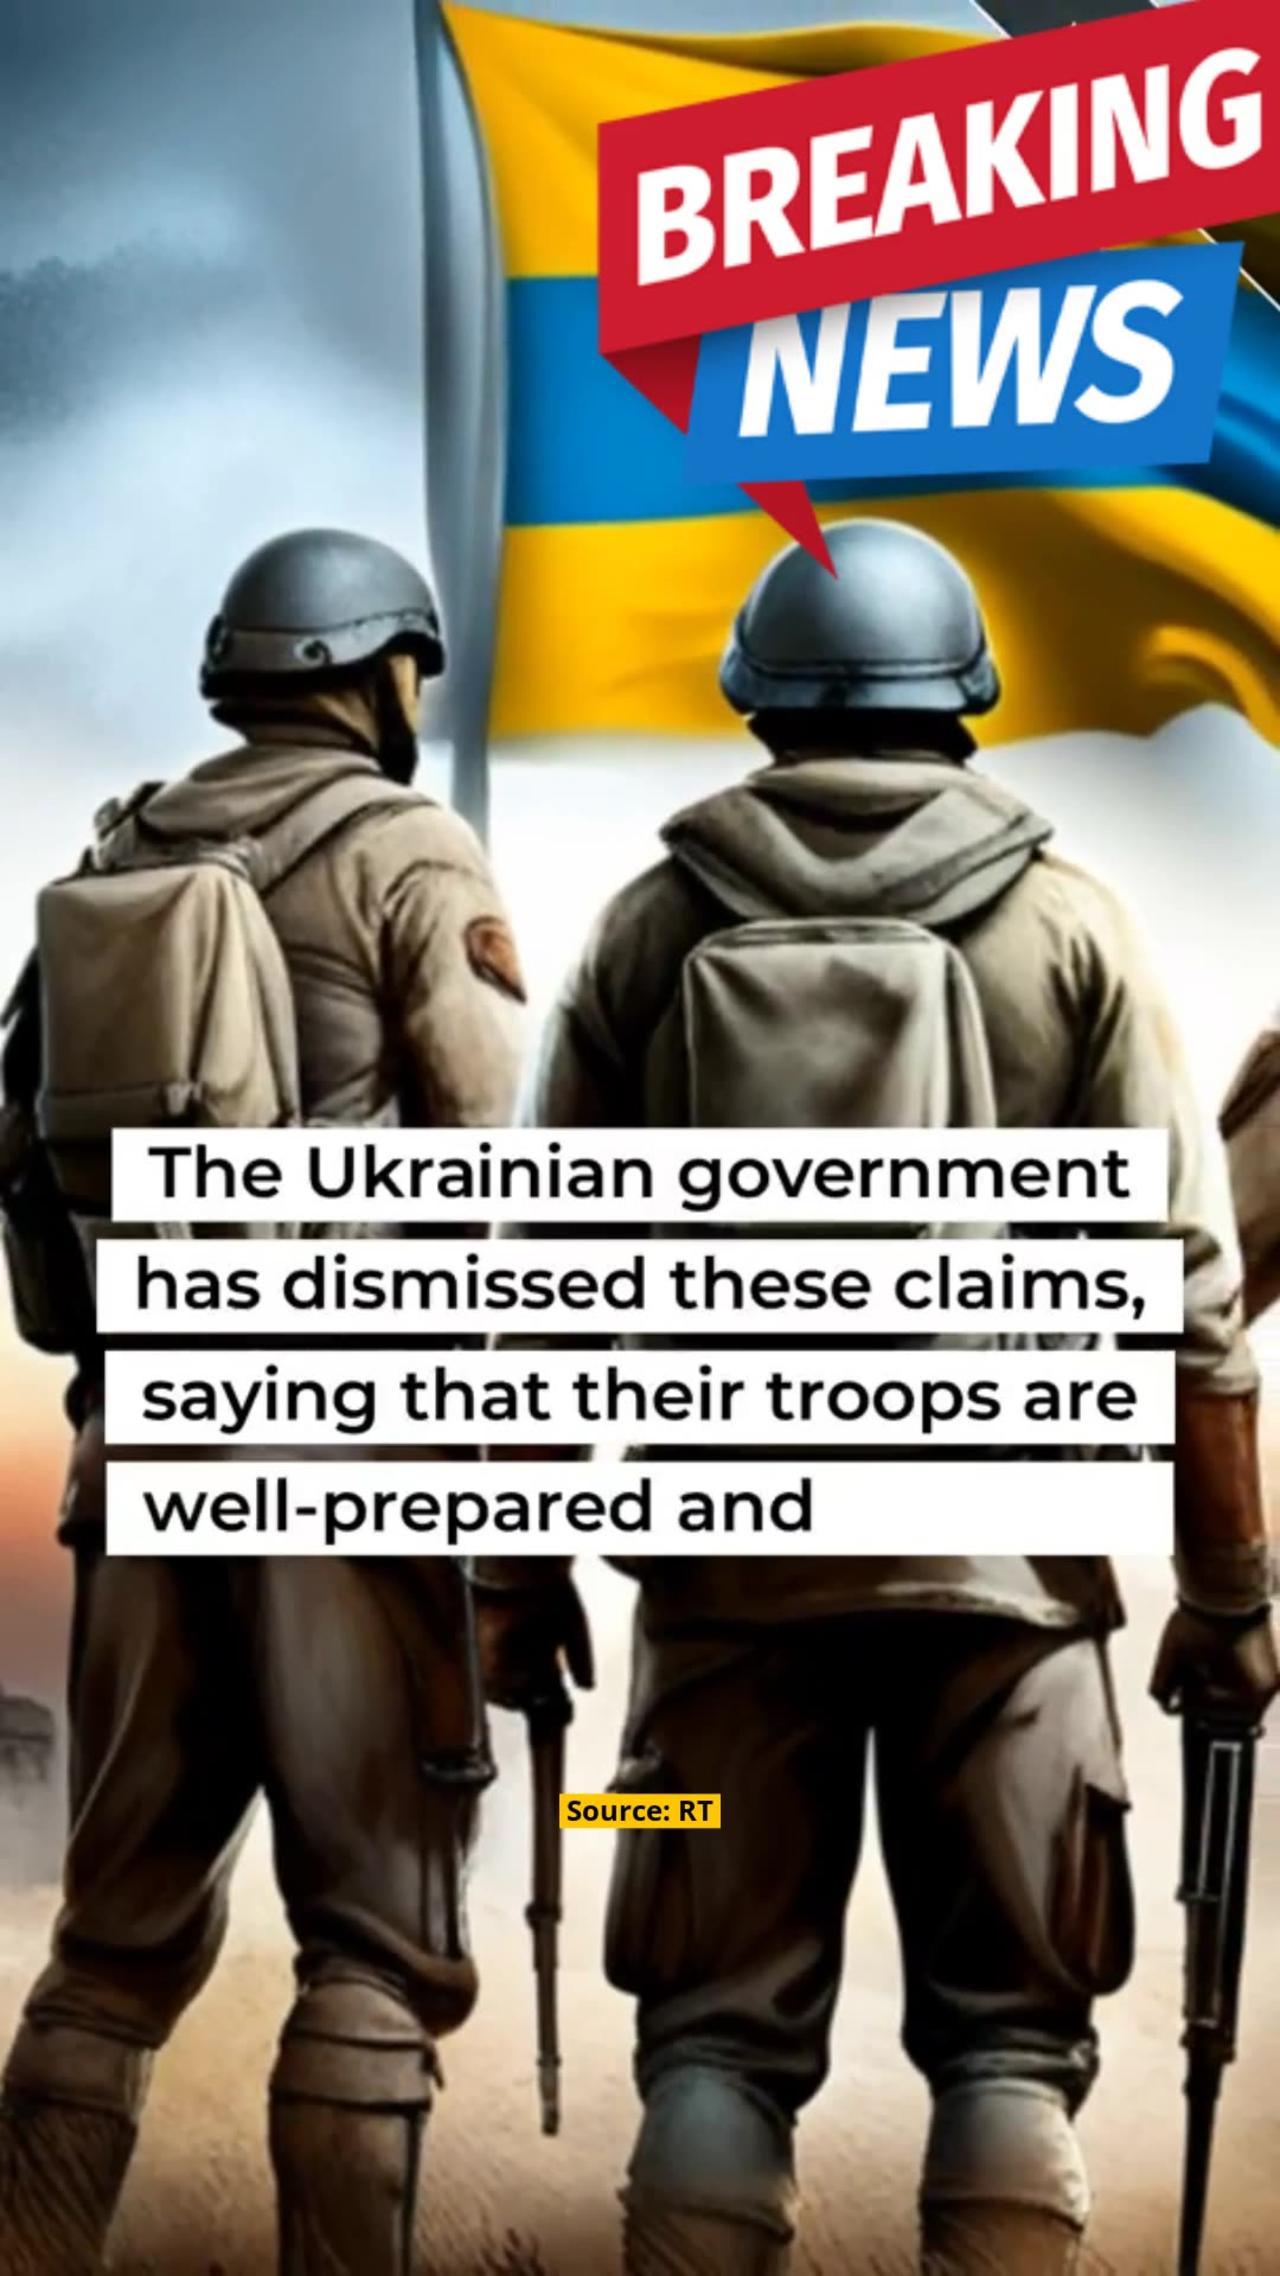 Ukraine’s Counteroffensive ‘Suicidal’ - Moscow